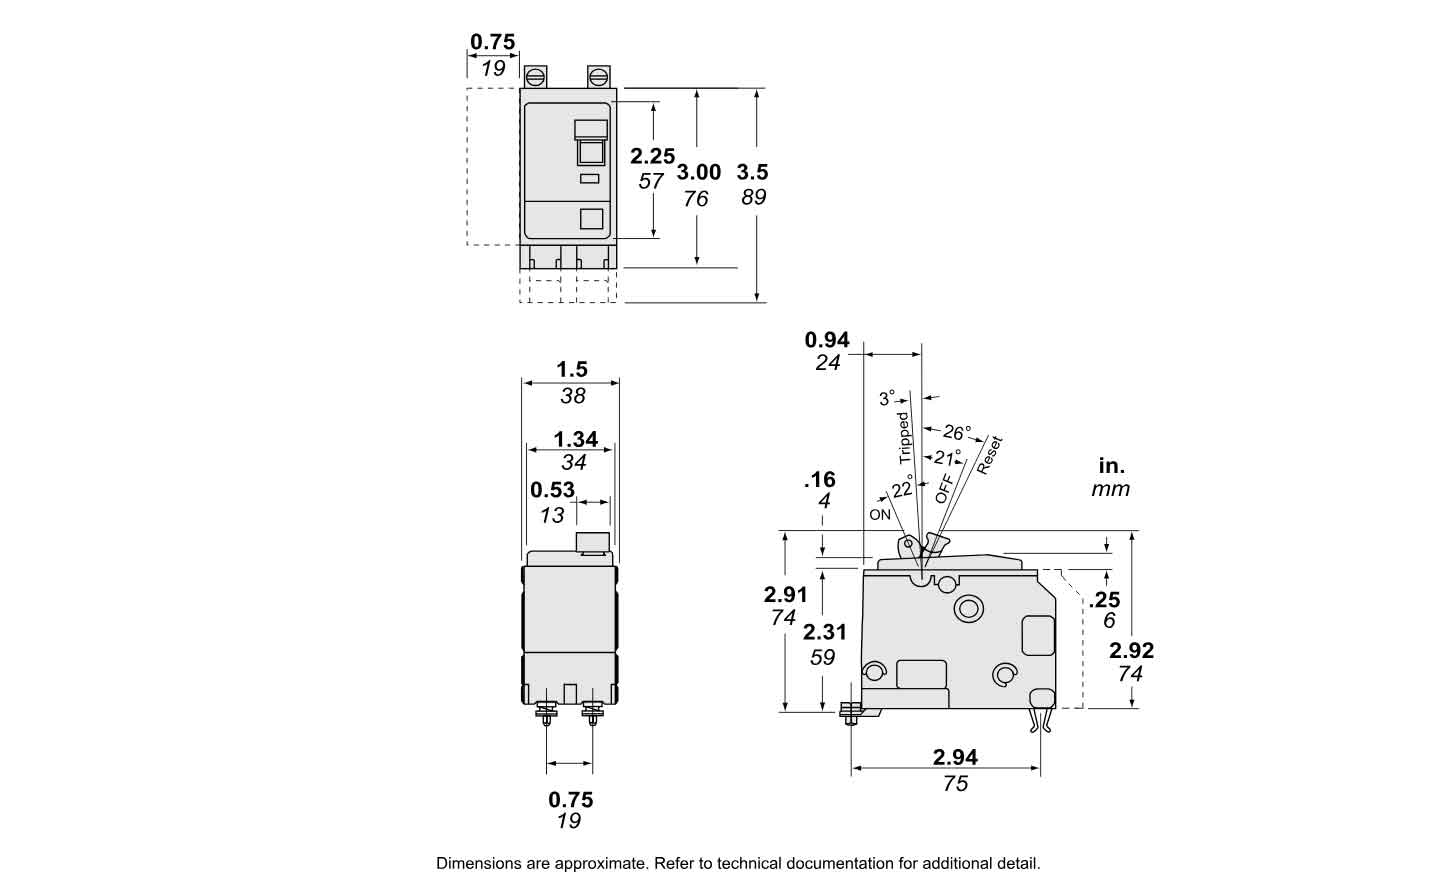 QOB225VH - Square D - Molded Case Circuit Breaker